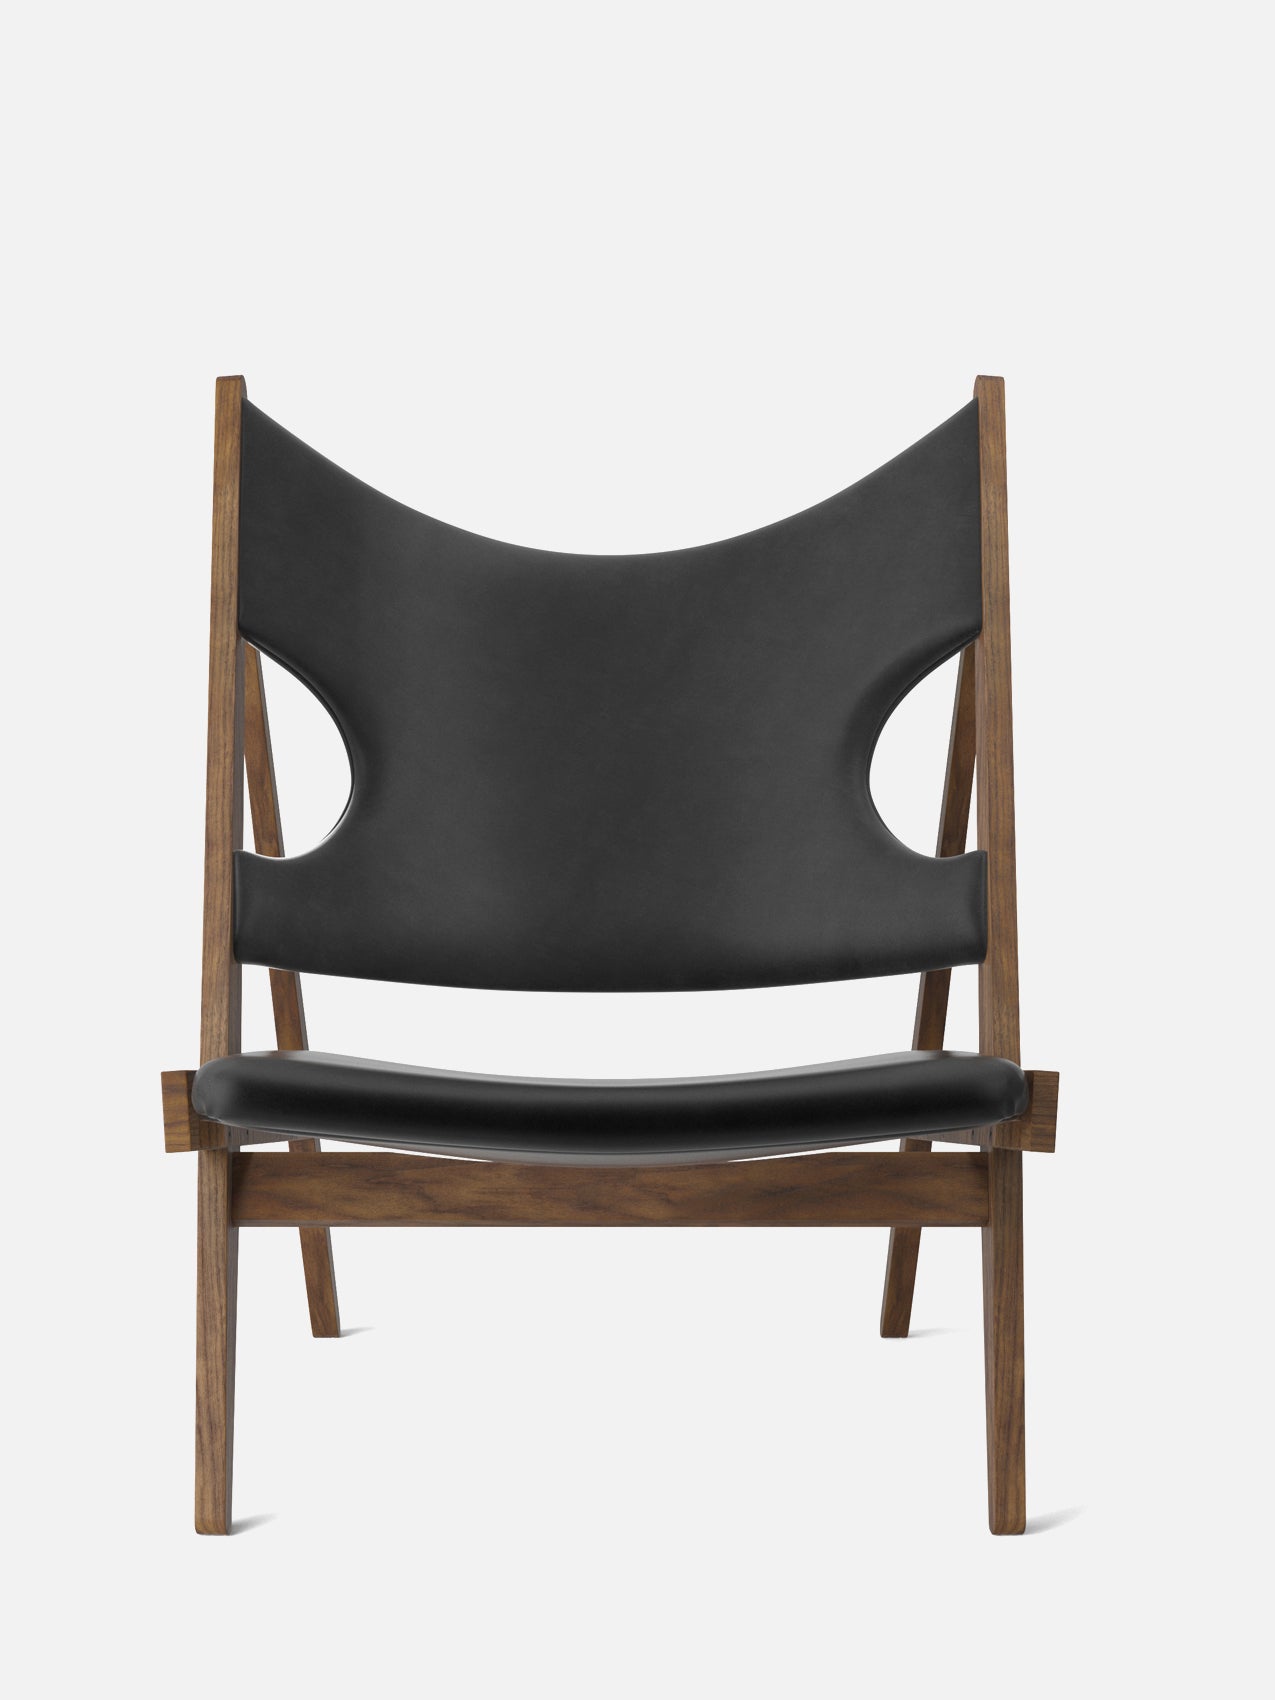 Knitting Chair-Lounge Chair-Ib Kofod-Larsen-Lounge Height (Seat 11.8in H)/Walnut-0842 Black/Dakar-menu-minimalist-modern-danish-design-home-decor